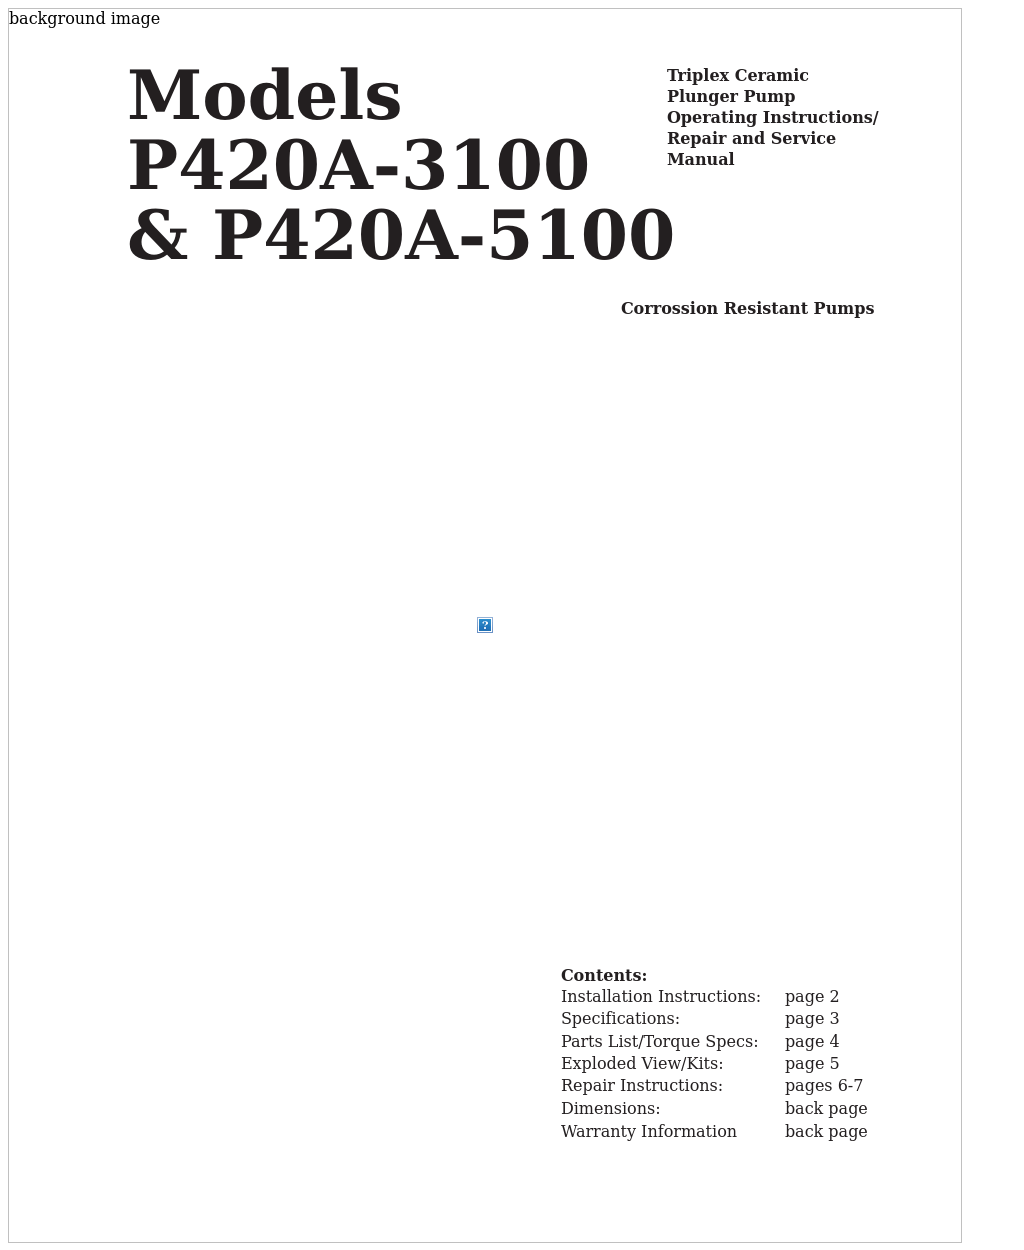 P420A-3100